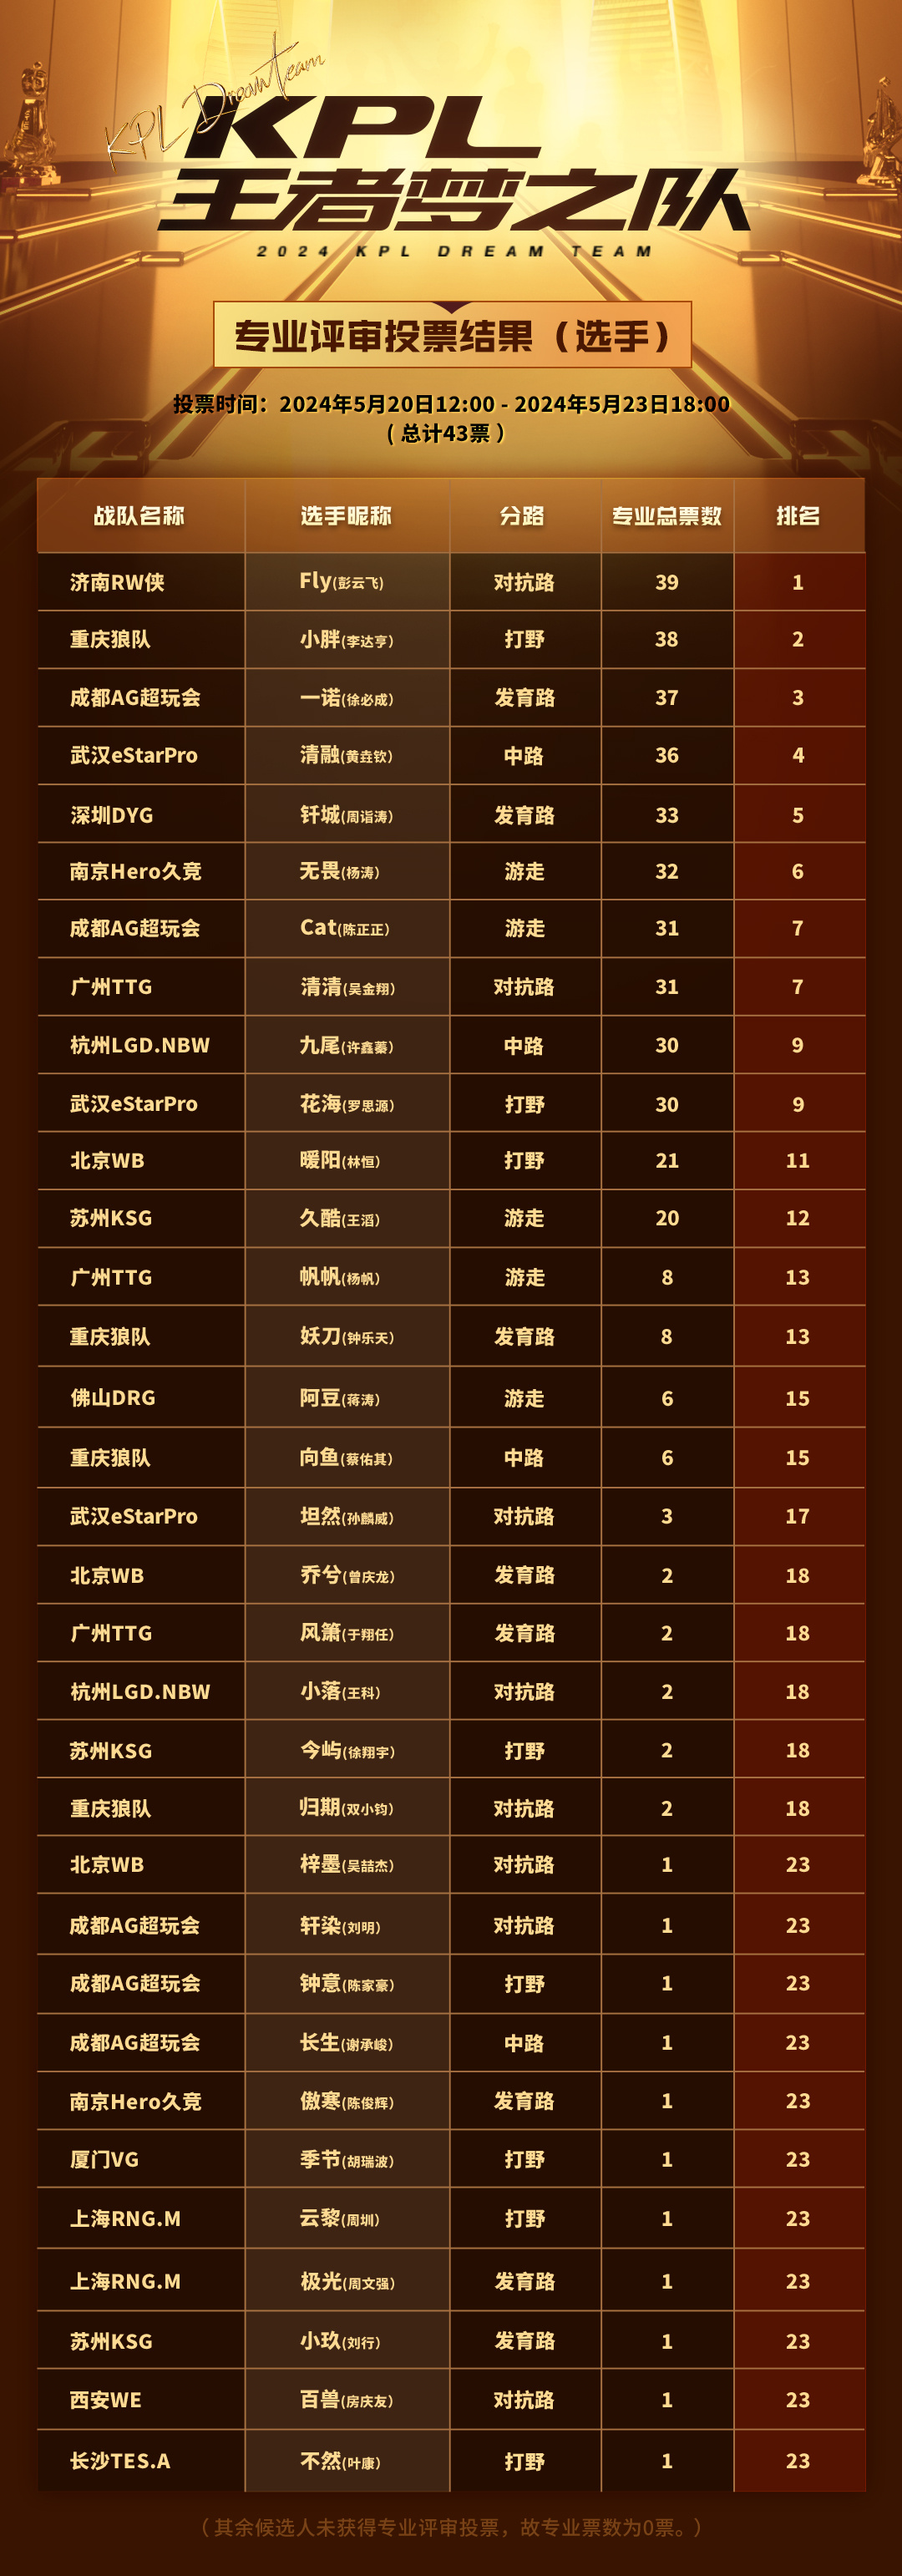 KPL公布王者梦之队投票票型:一诺总排名2.5最高，Fly/无畏并列3.5